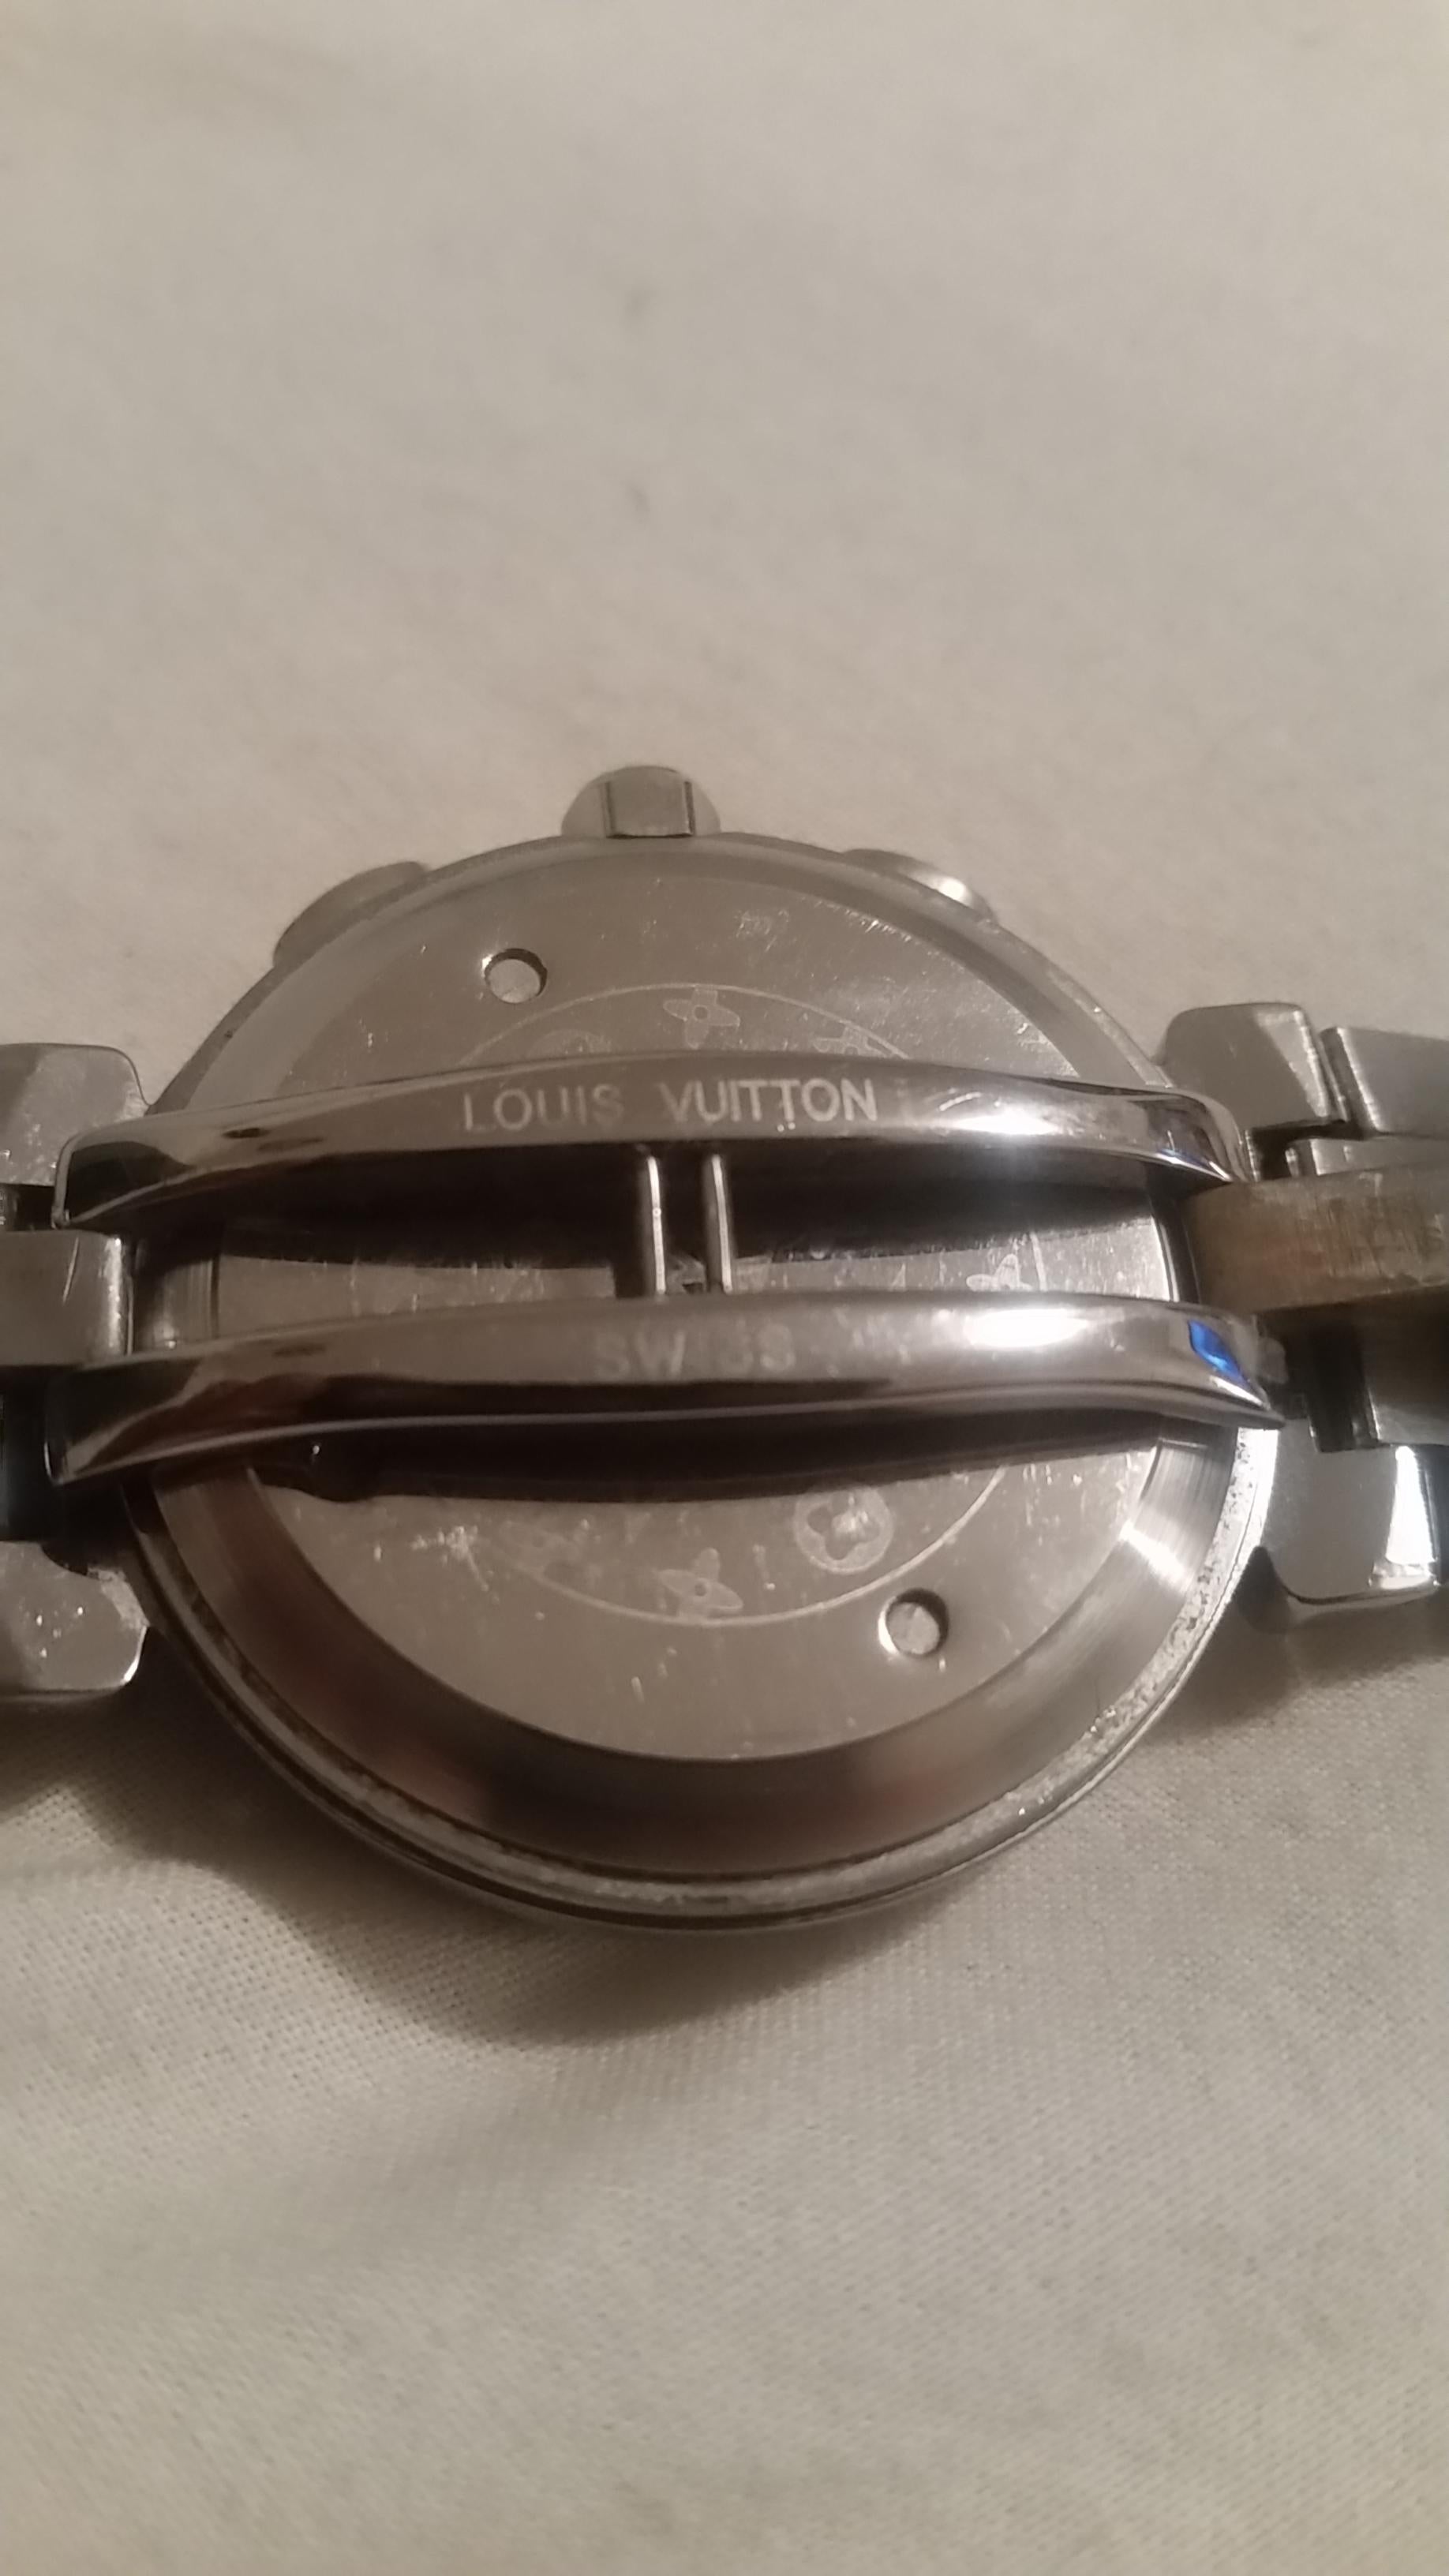 How to identify fake Louis Vuitton watches - Quora